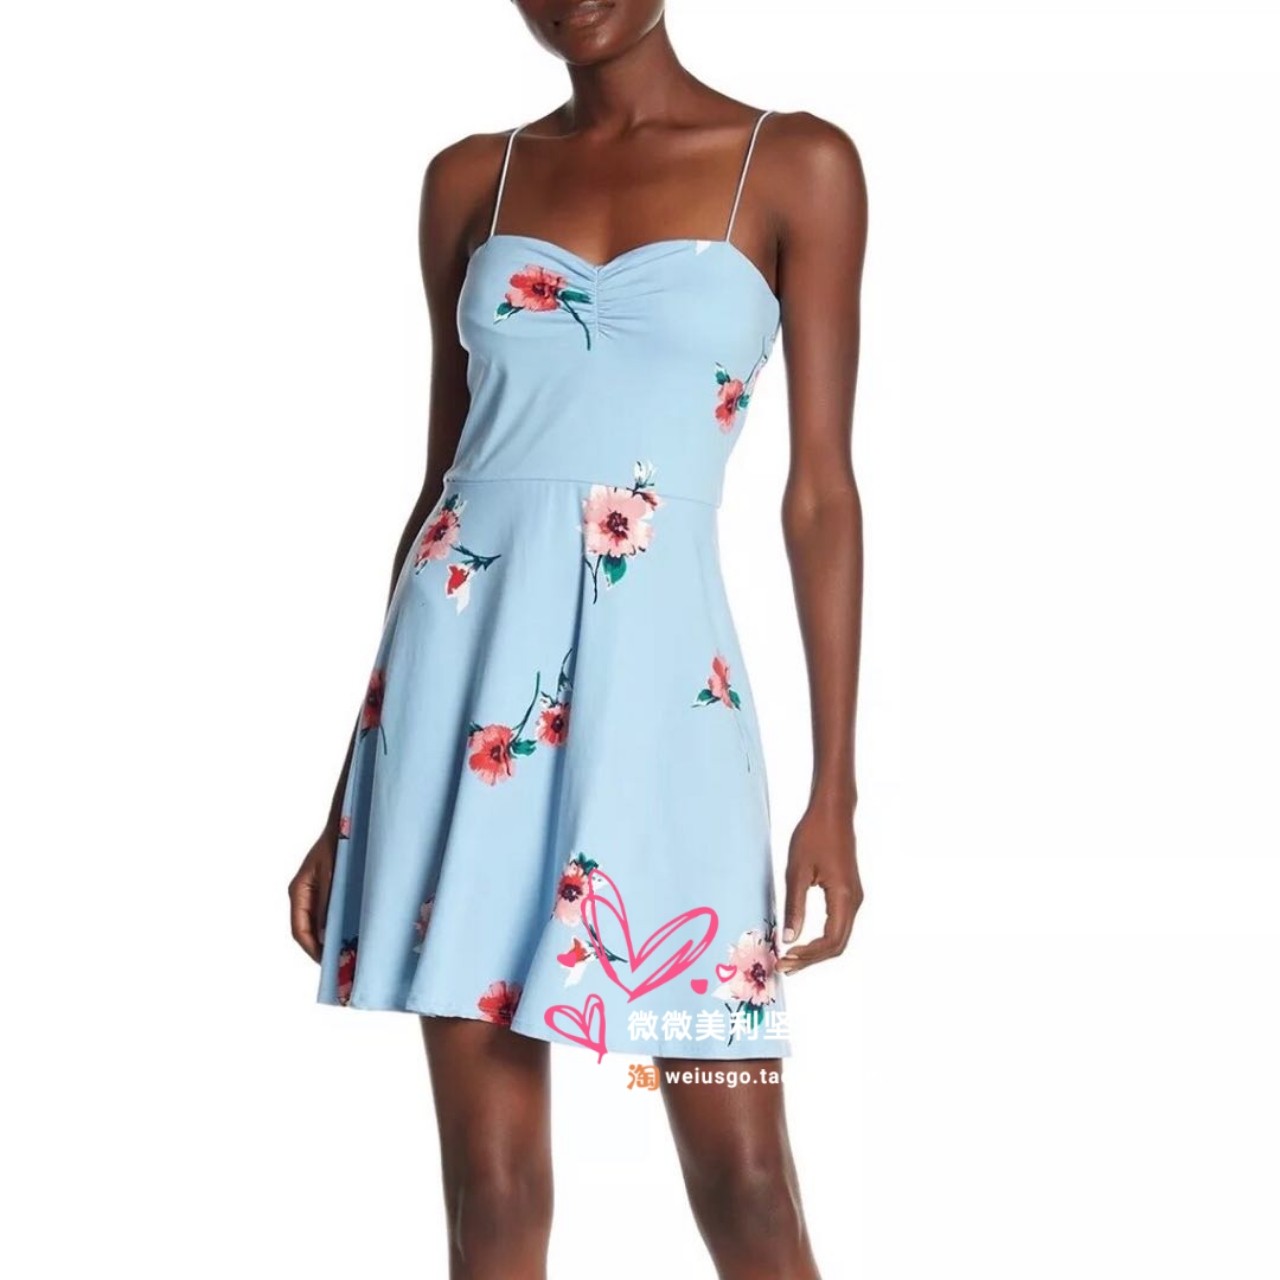 O U.S. Direct Mail R3329 SOCIALITE Sky Blue Strapless Sling Dress Polyester Stretch L Size